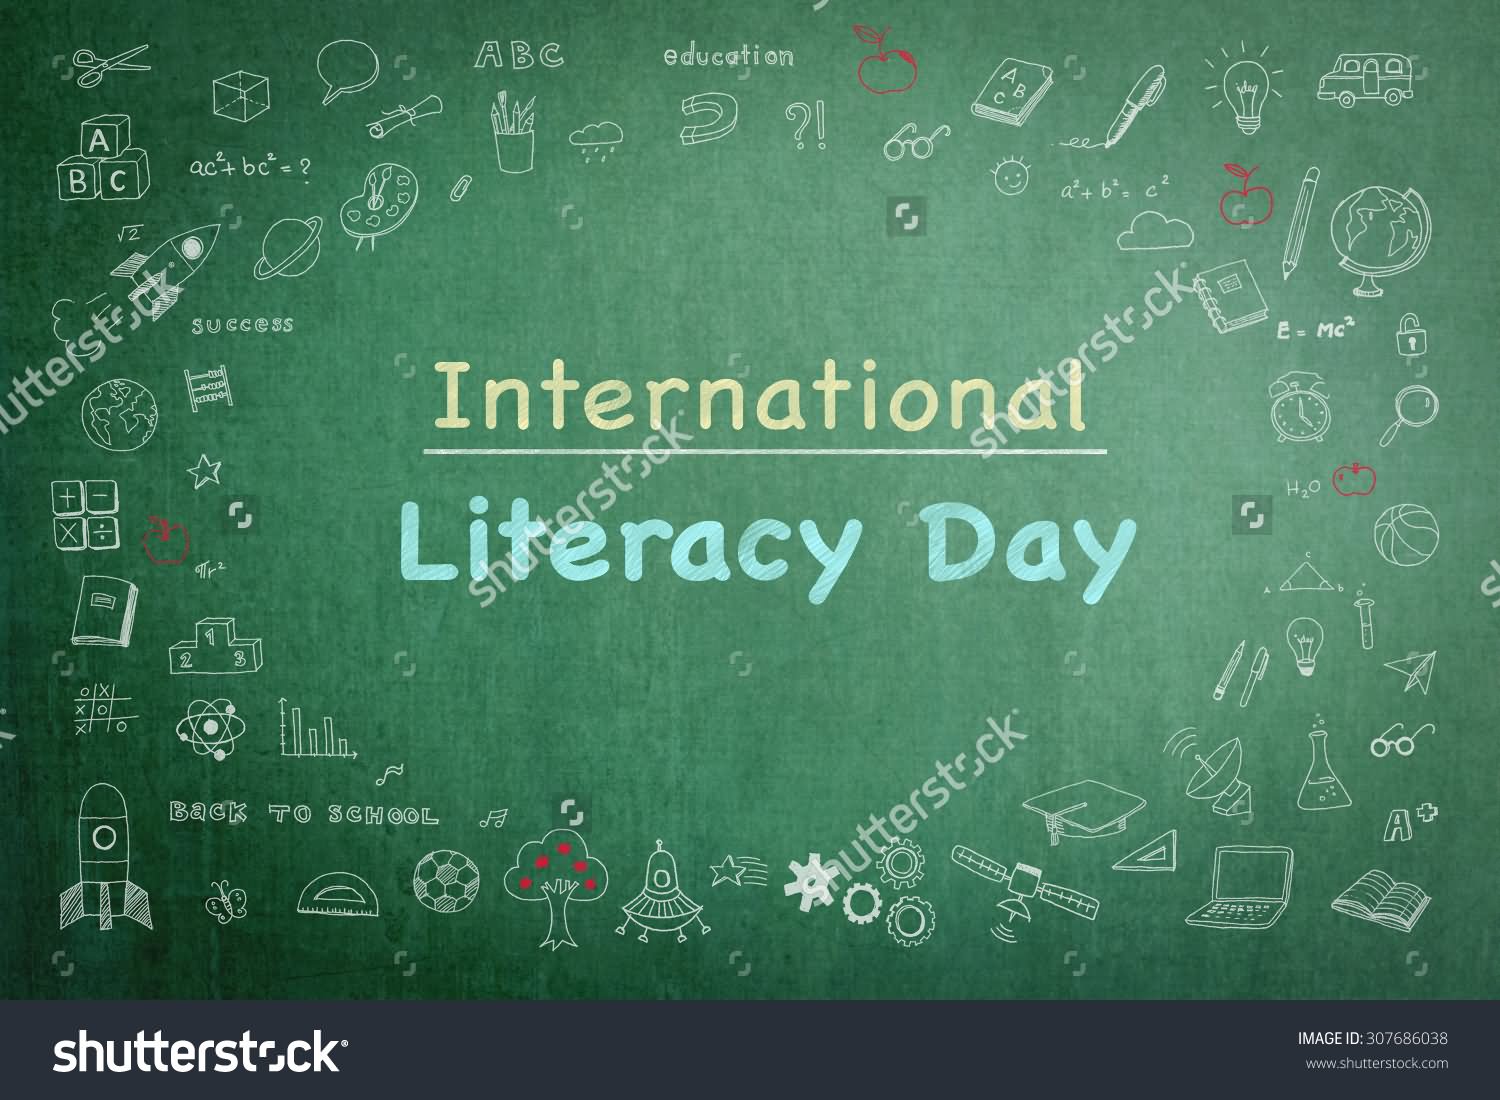 International Literacy Day Black Board Picture